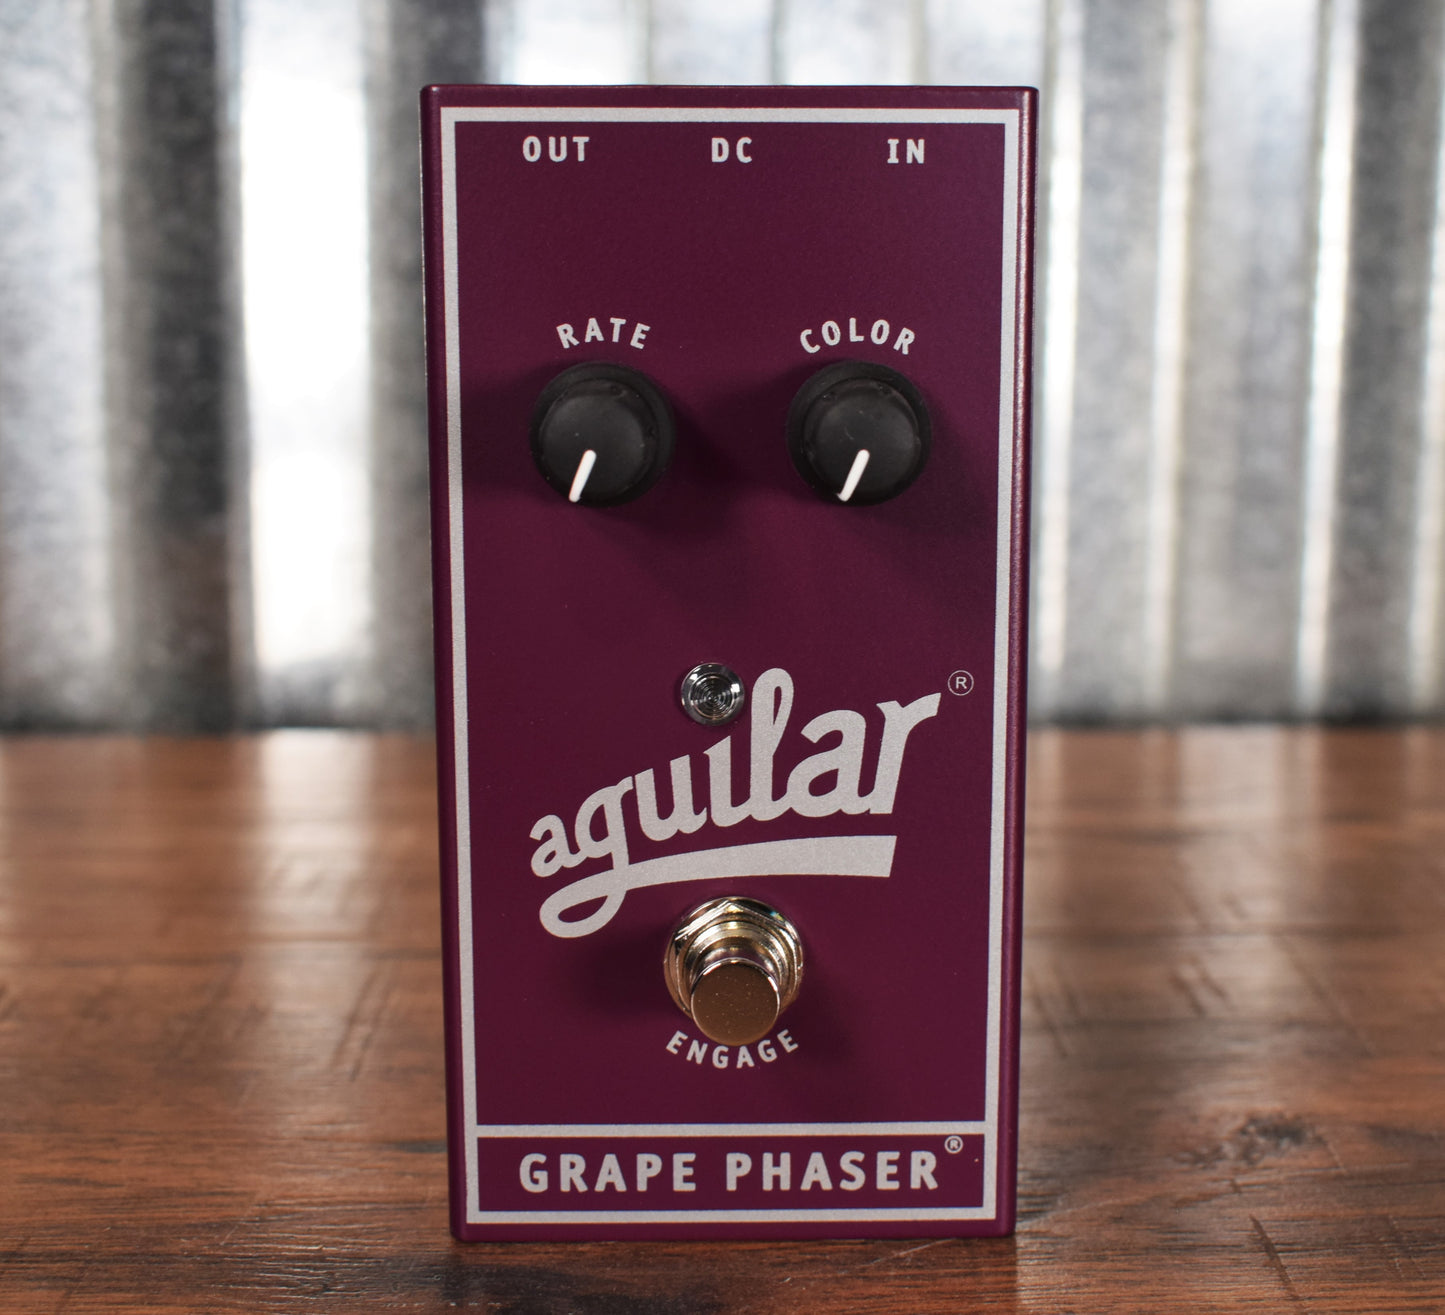 Aguilar Grape Phaser Bass Effect Pedal